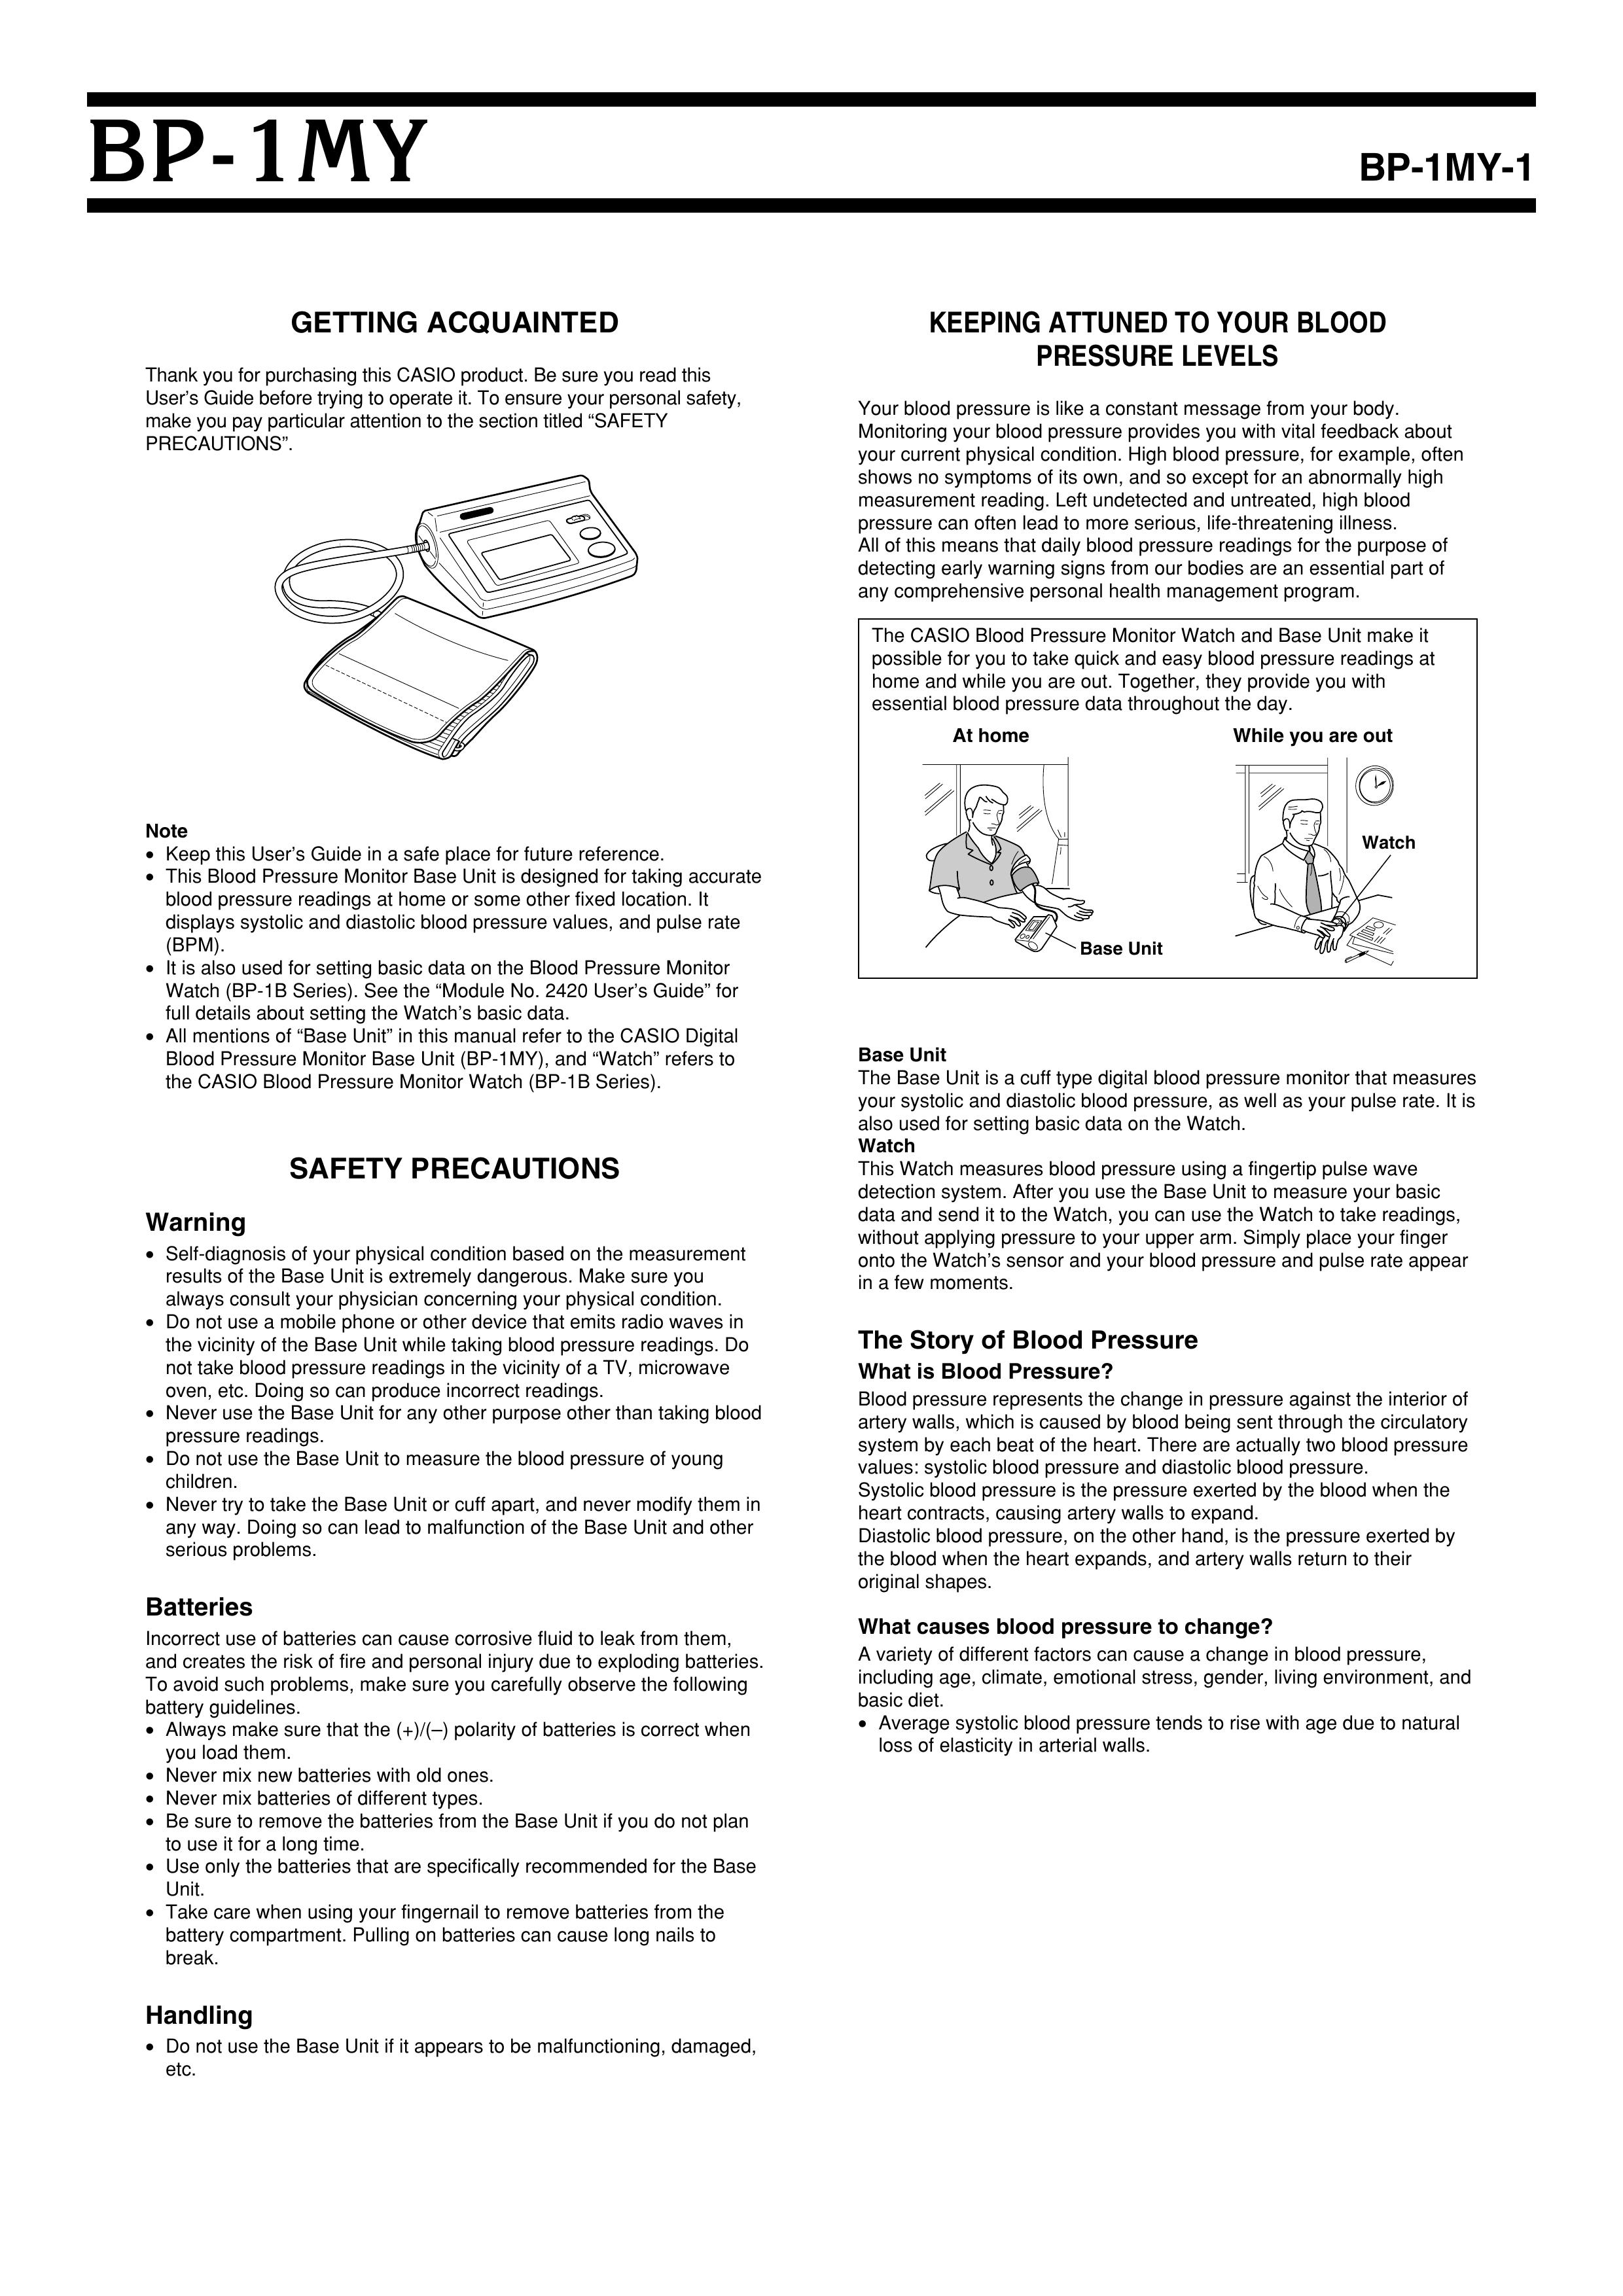 Casio BP-1MY-1 Blood Pressure Monitor User Manual